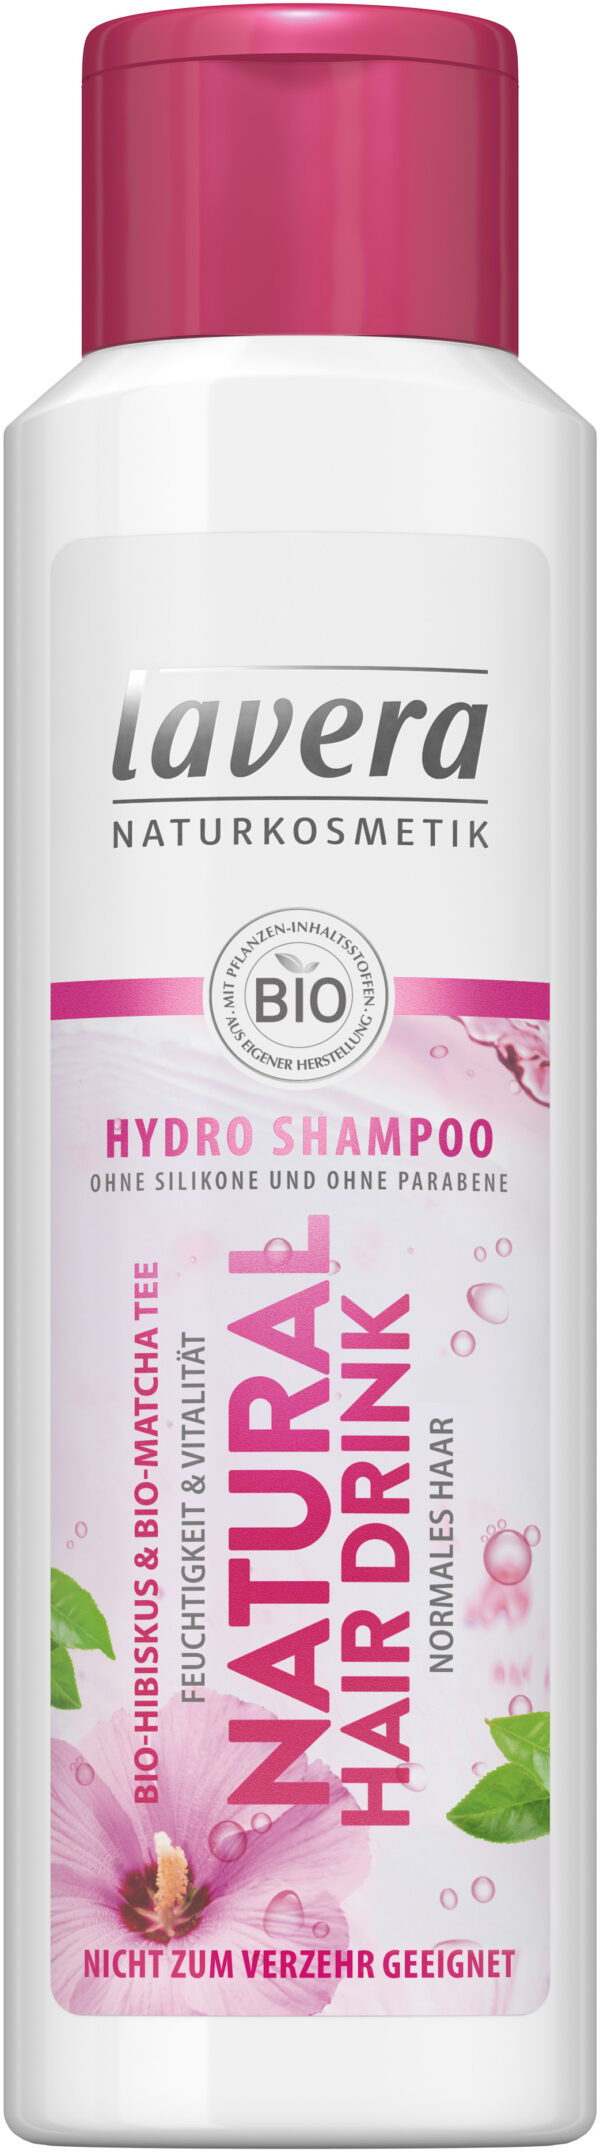 lavera Natural Hair Drink Hydro Shampoo 250ml